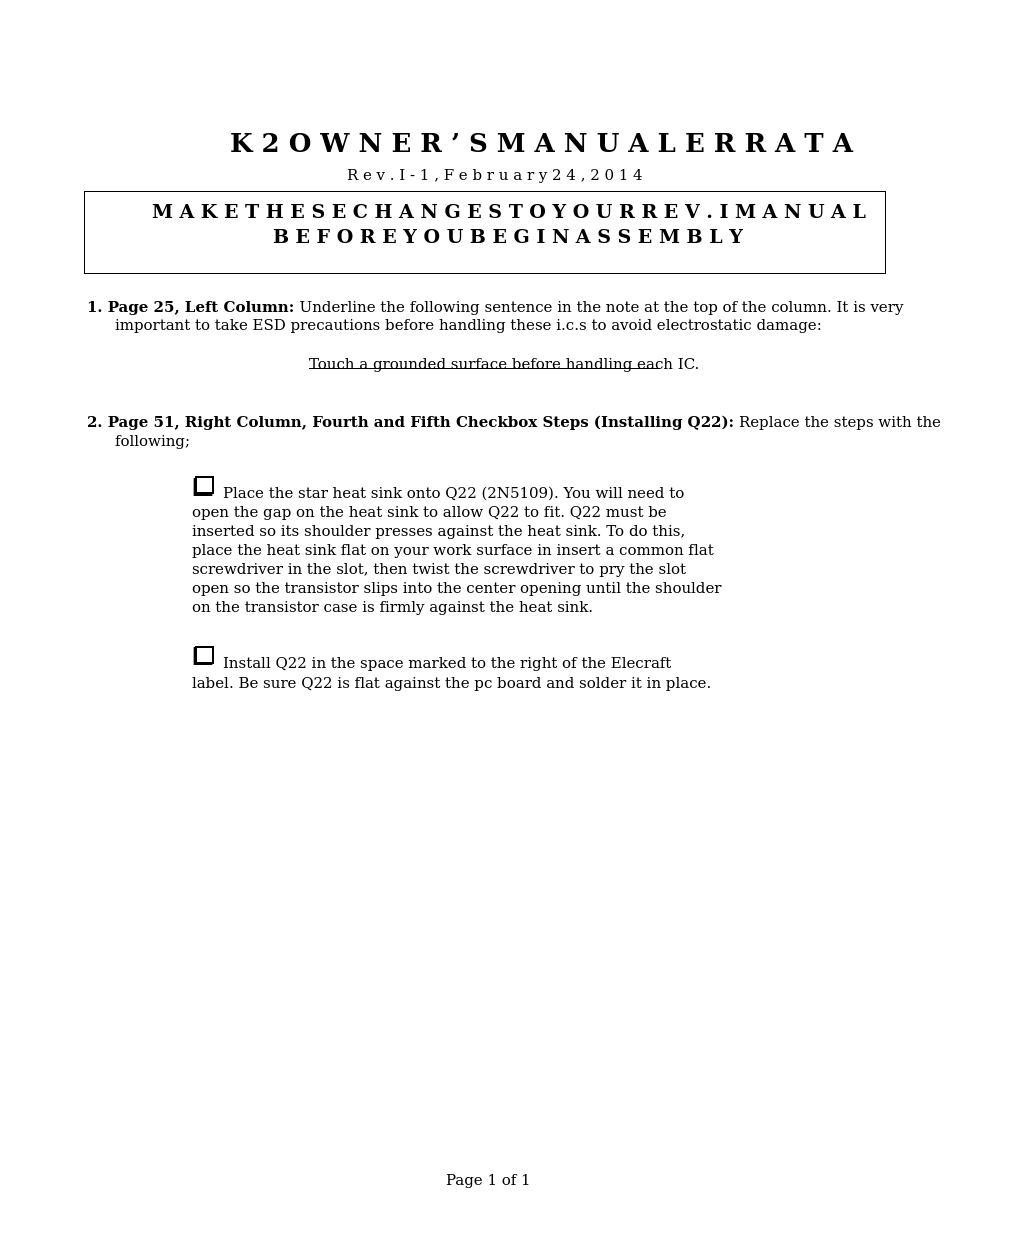 K2 Owner's Manual Errata